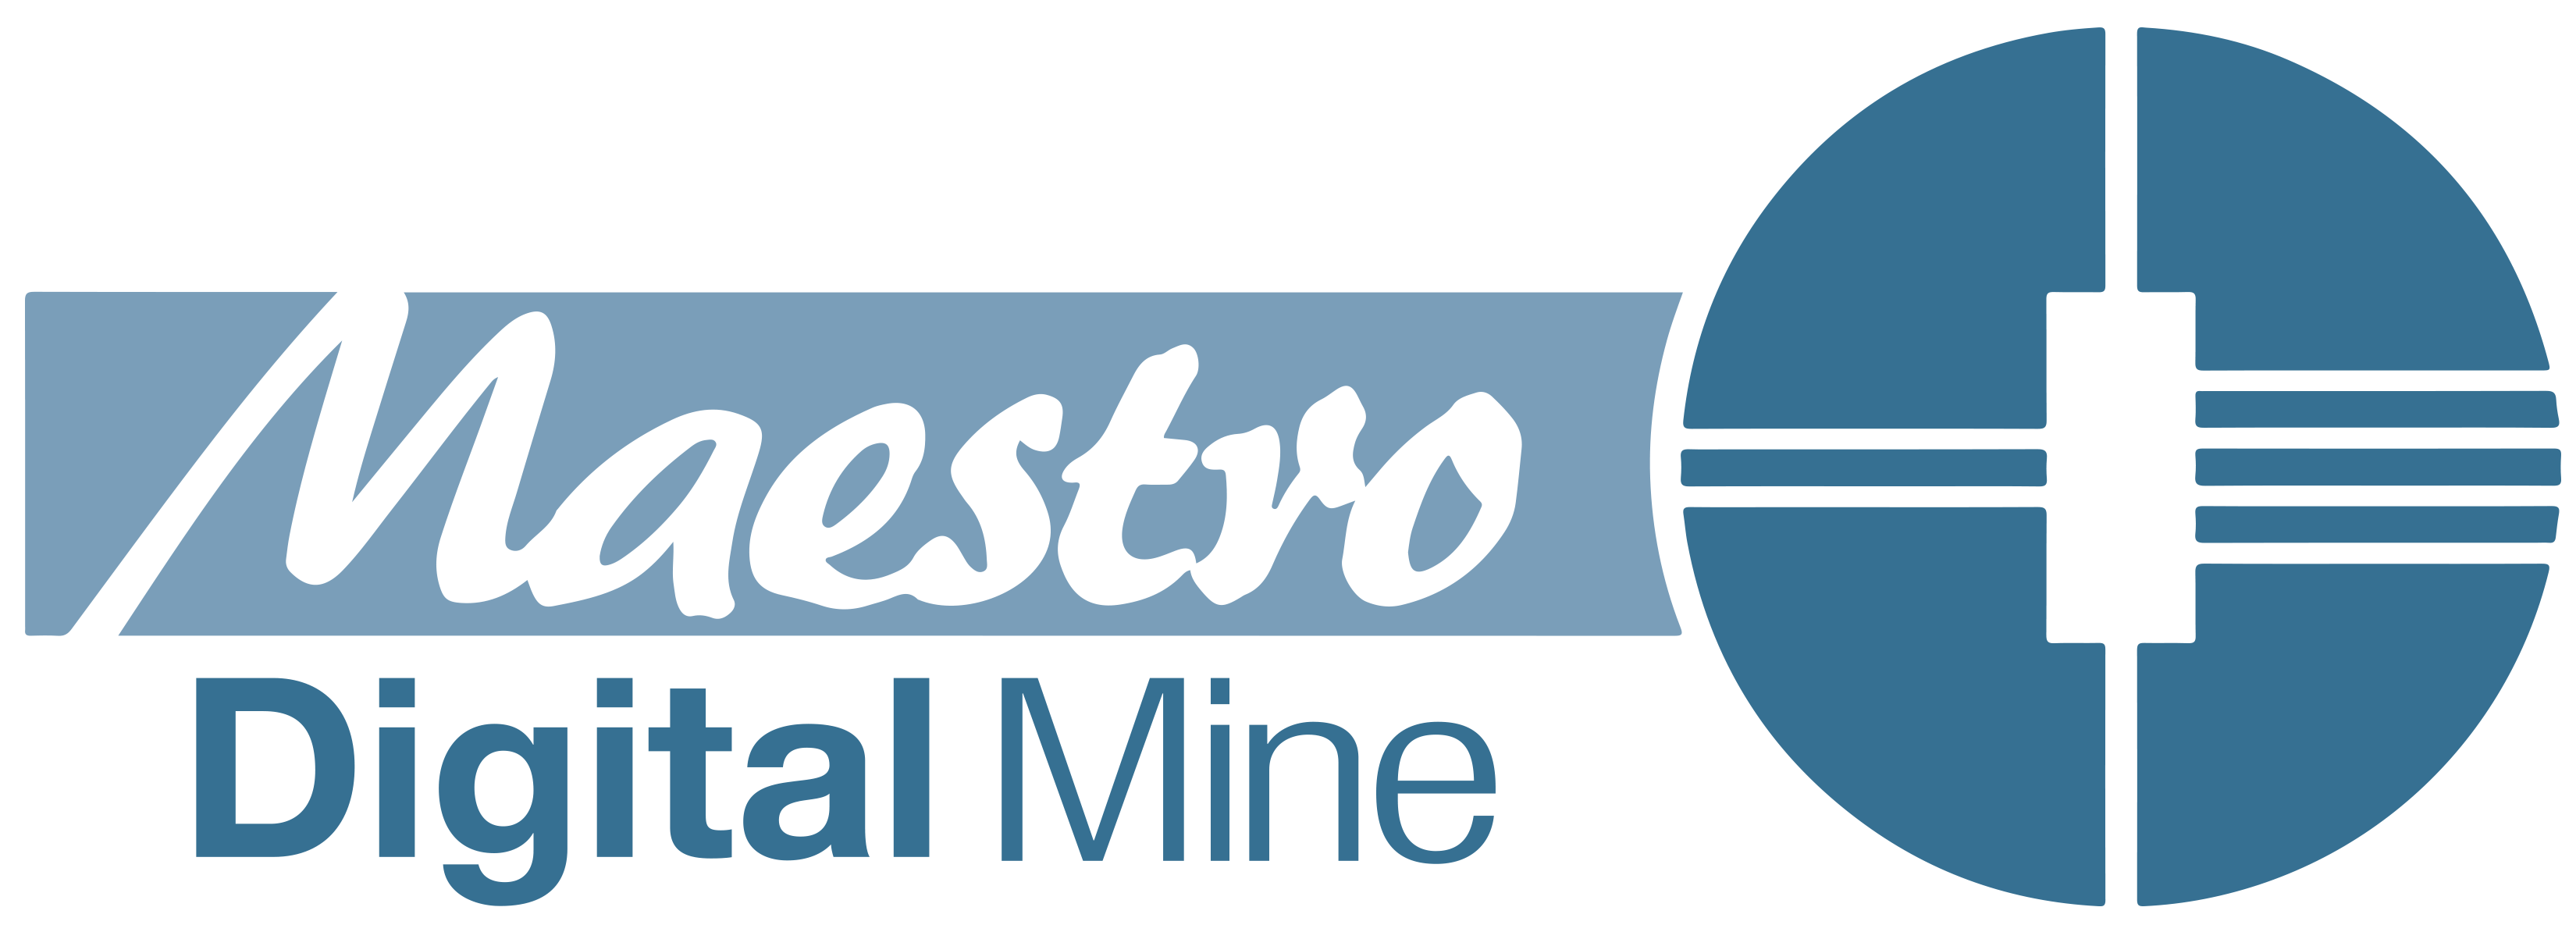 Maestro Digital Mine